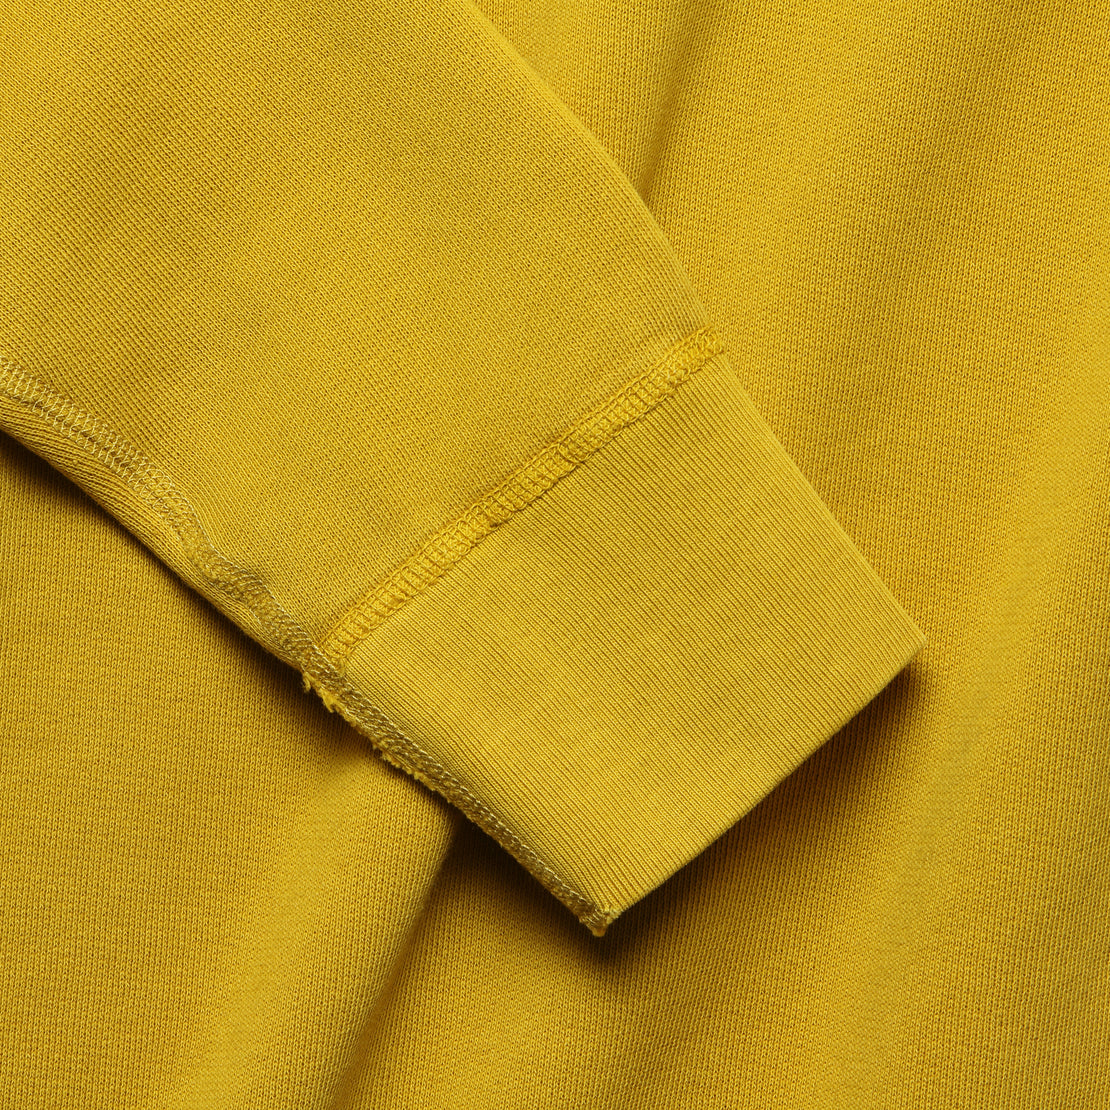 French Terry Sweatshirt - Honey Mustard - Alex Mill - STAG Provisions - Tops - Fleece / Sweatshirt